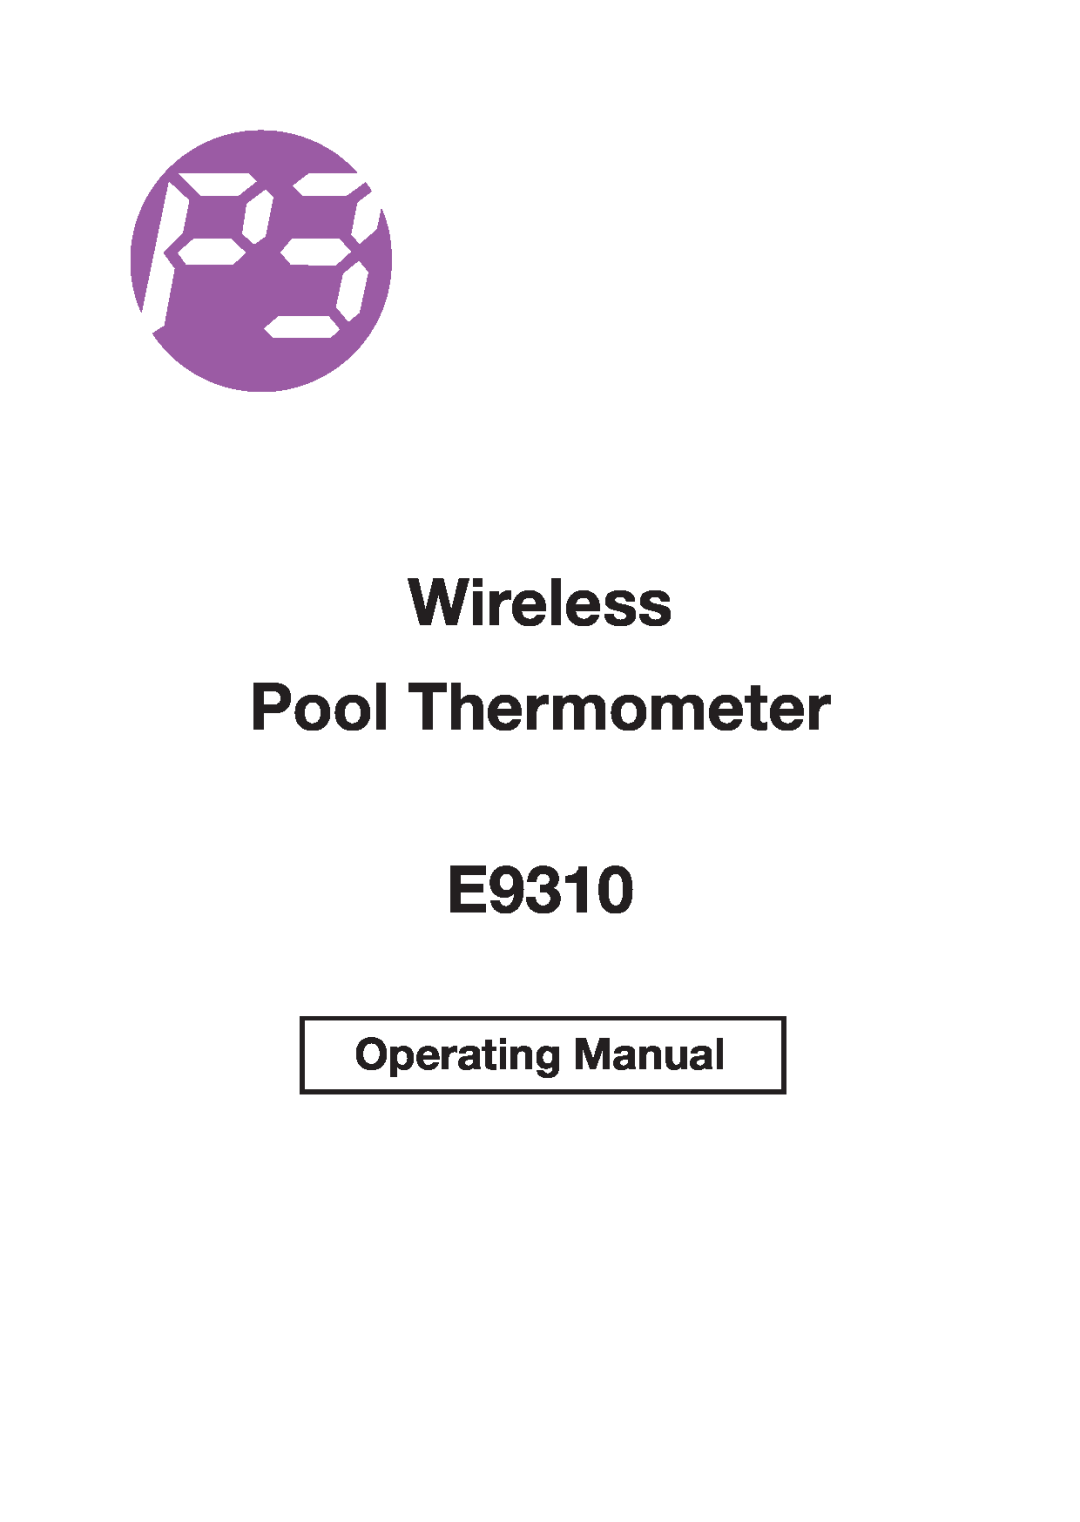 P3 International manual Wireless Pool Thermometer E9310, Operating Manual 